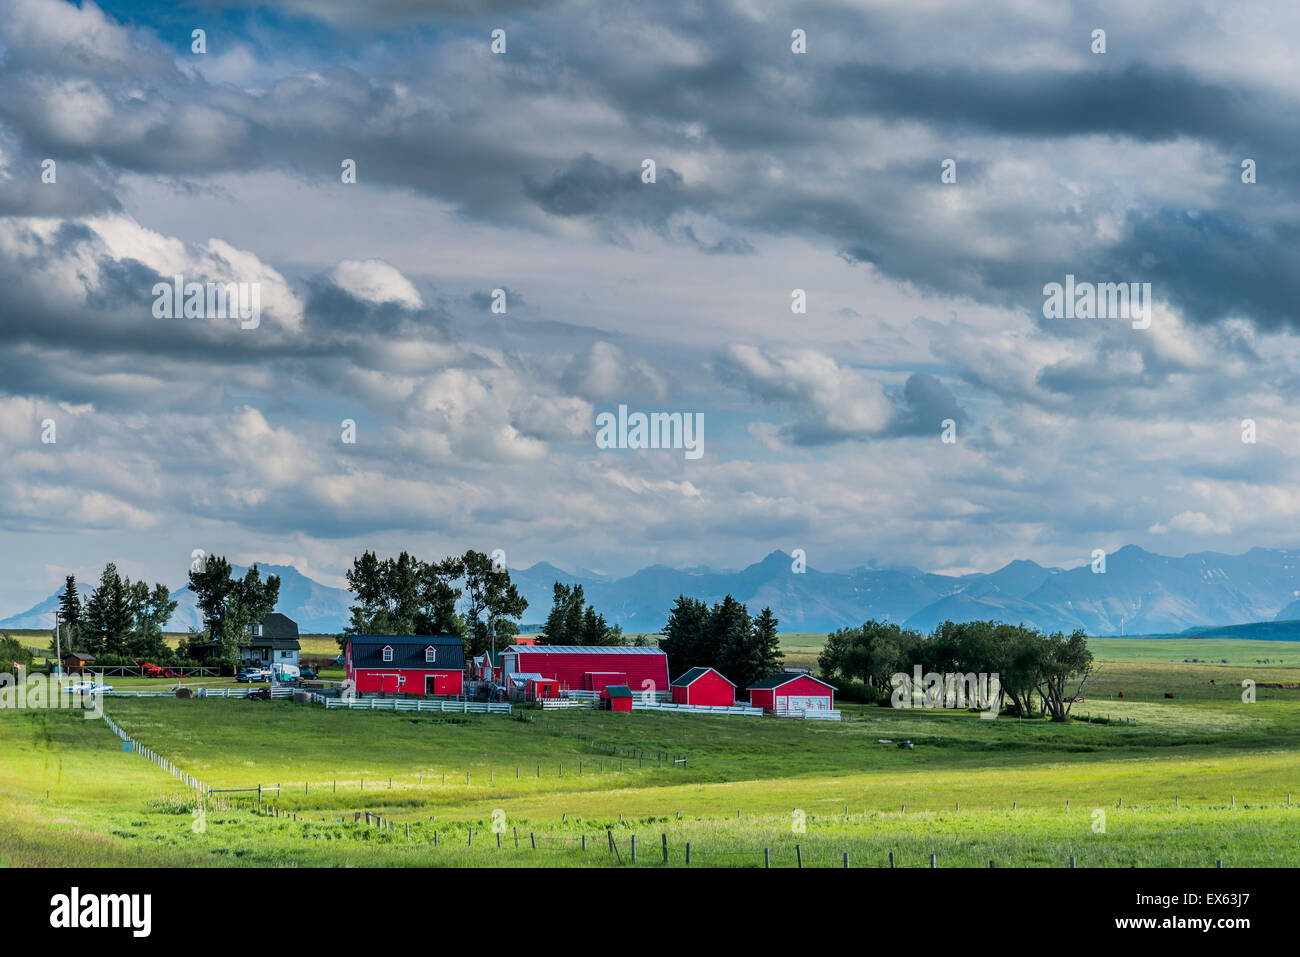 Farm in the foothills, Pincher Creek, Alberta, Canada Stock Photo